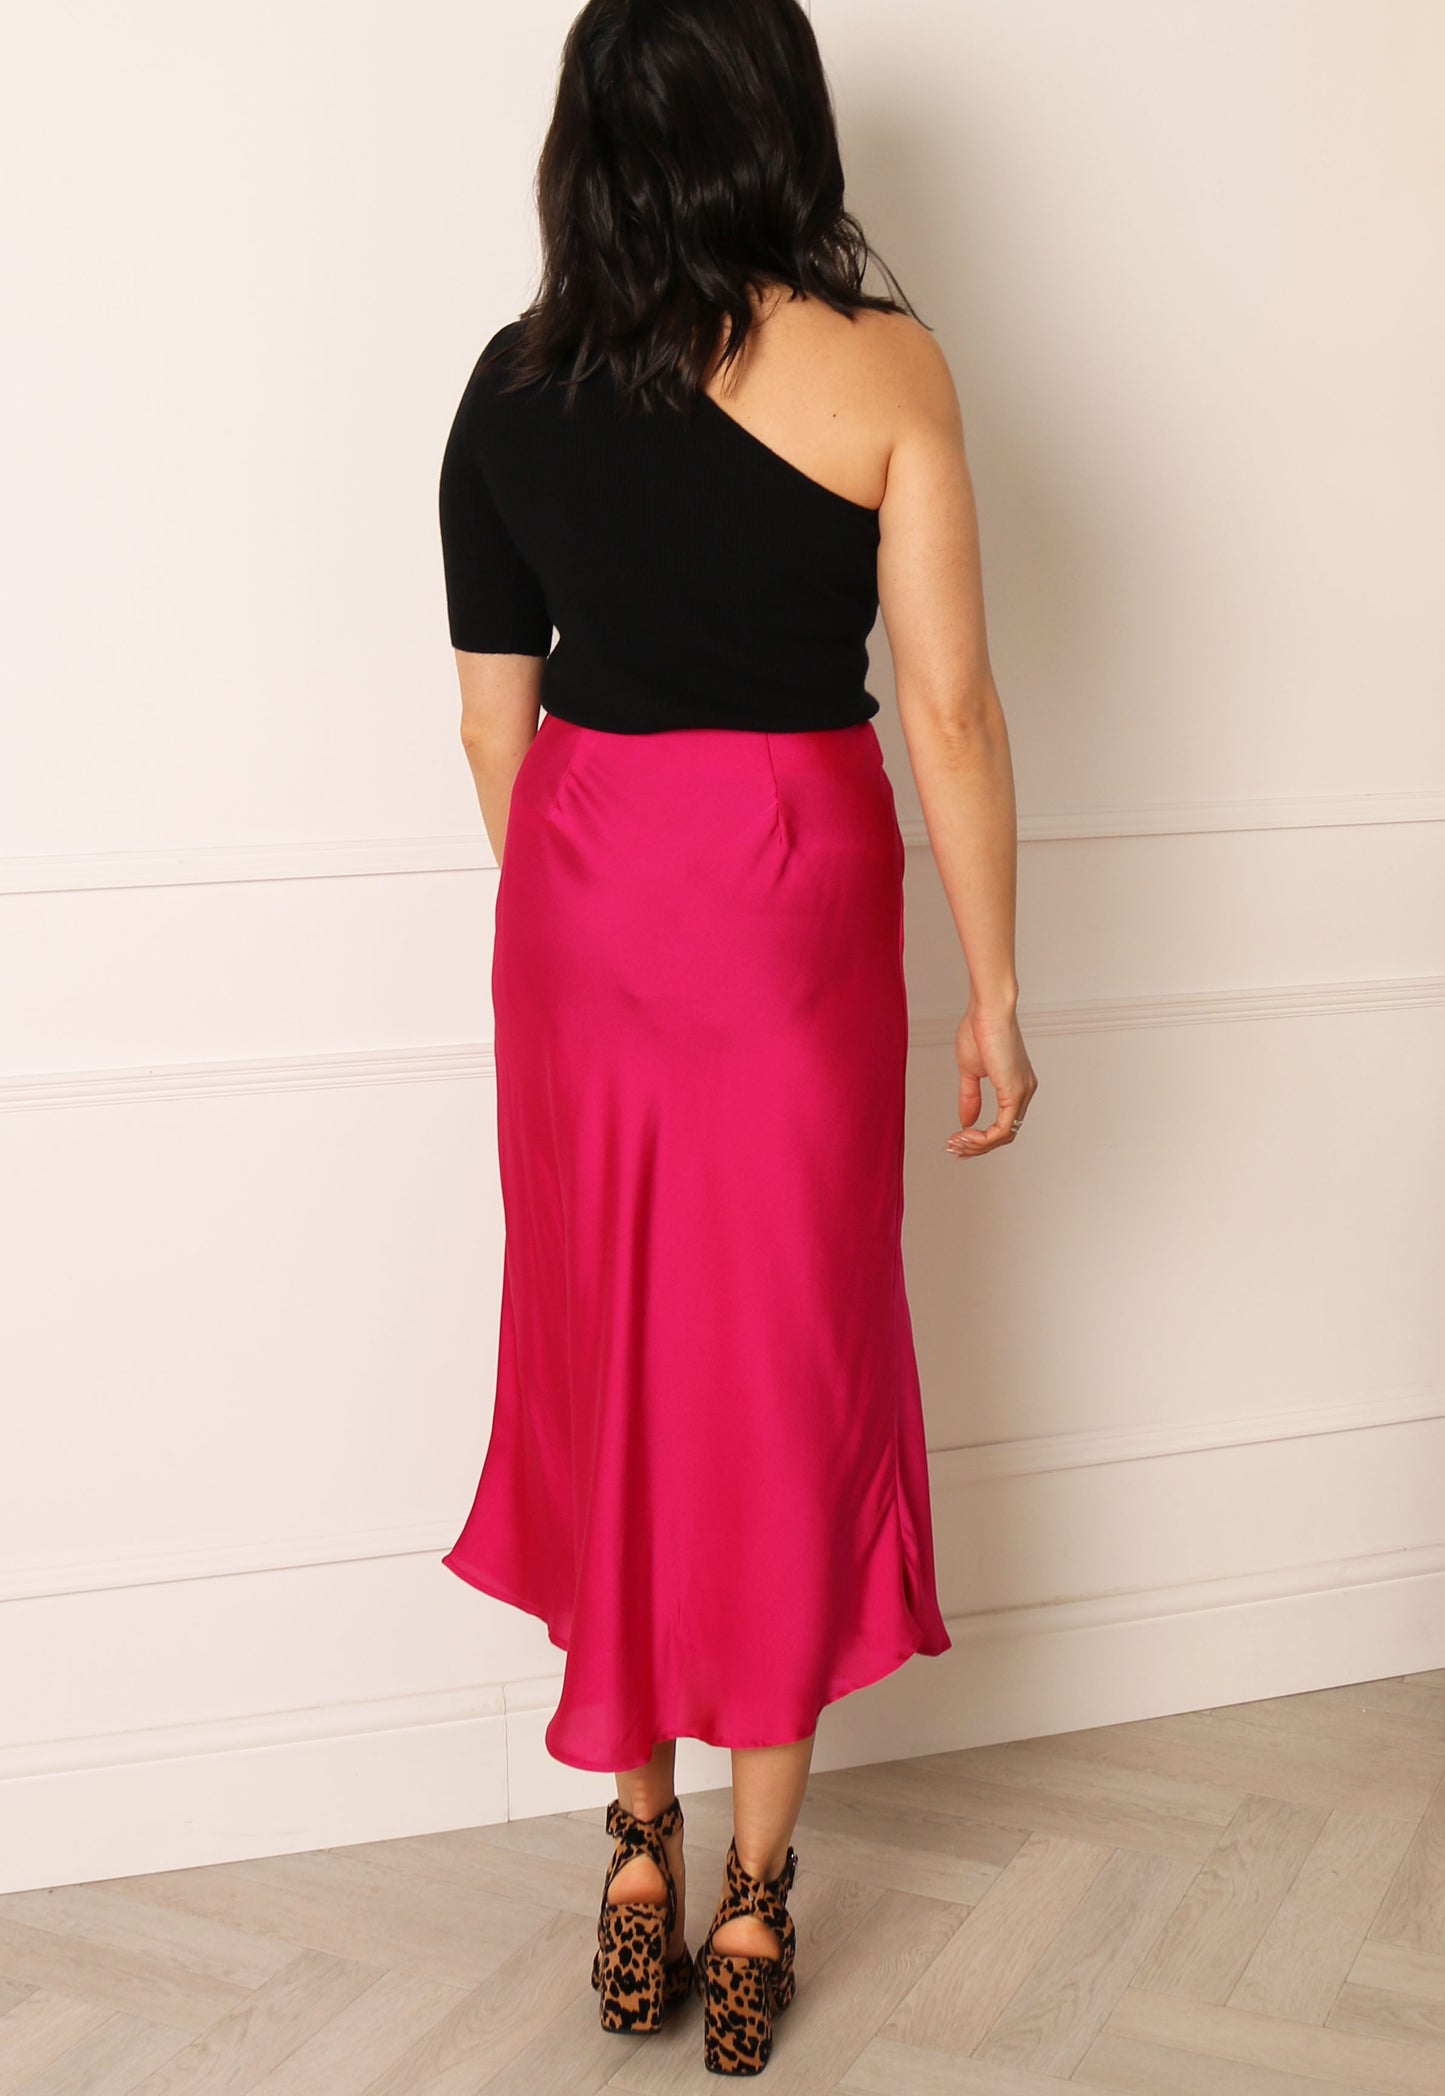 
                  
                    VERO MODA Heart Bias Cut Satin Midi Slip Skirt in Fuchsia Pink - One Nation Clothing
                  
                